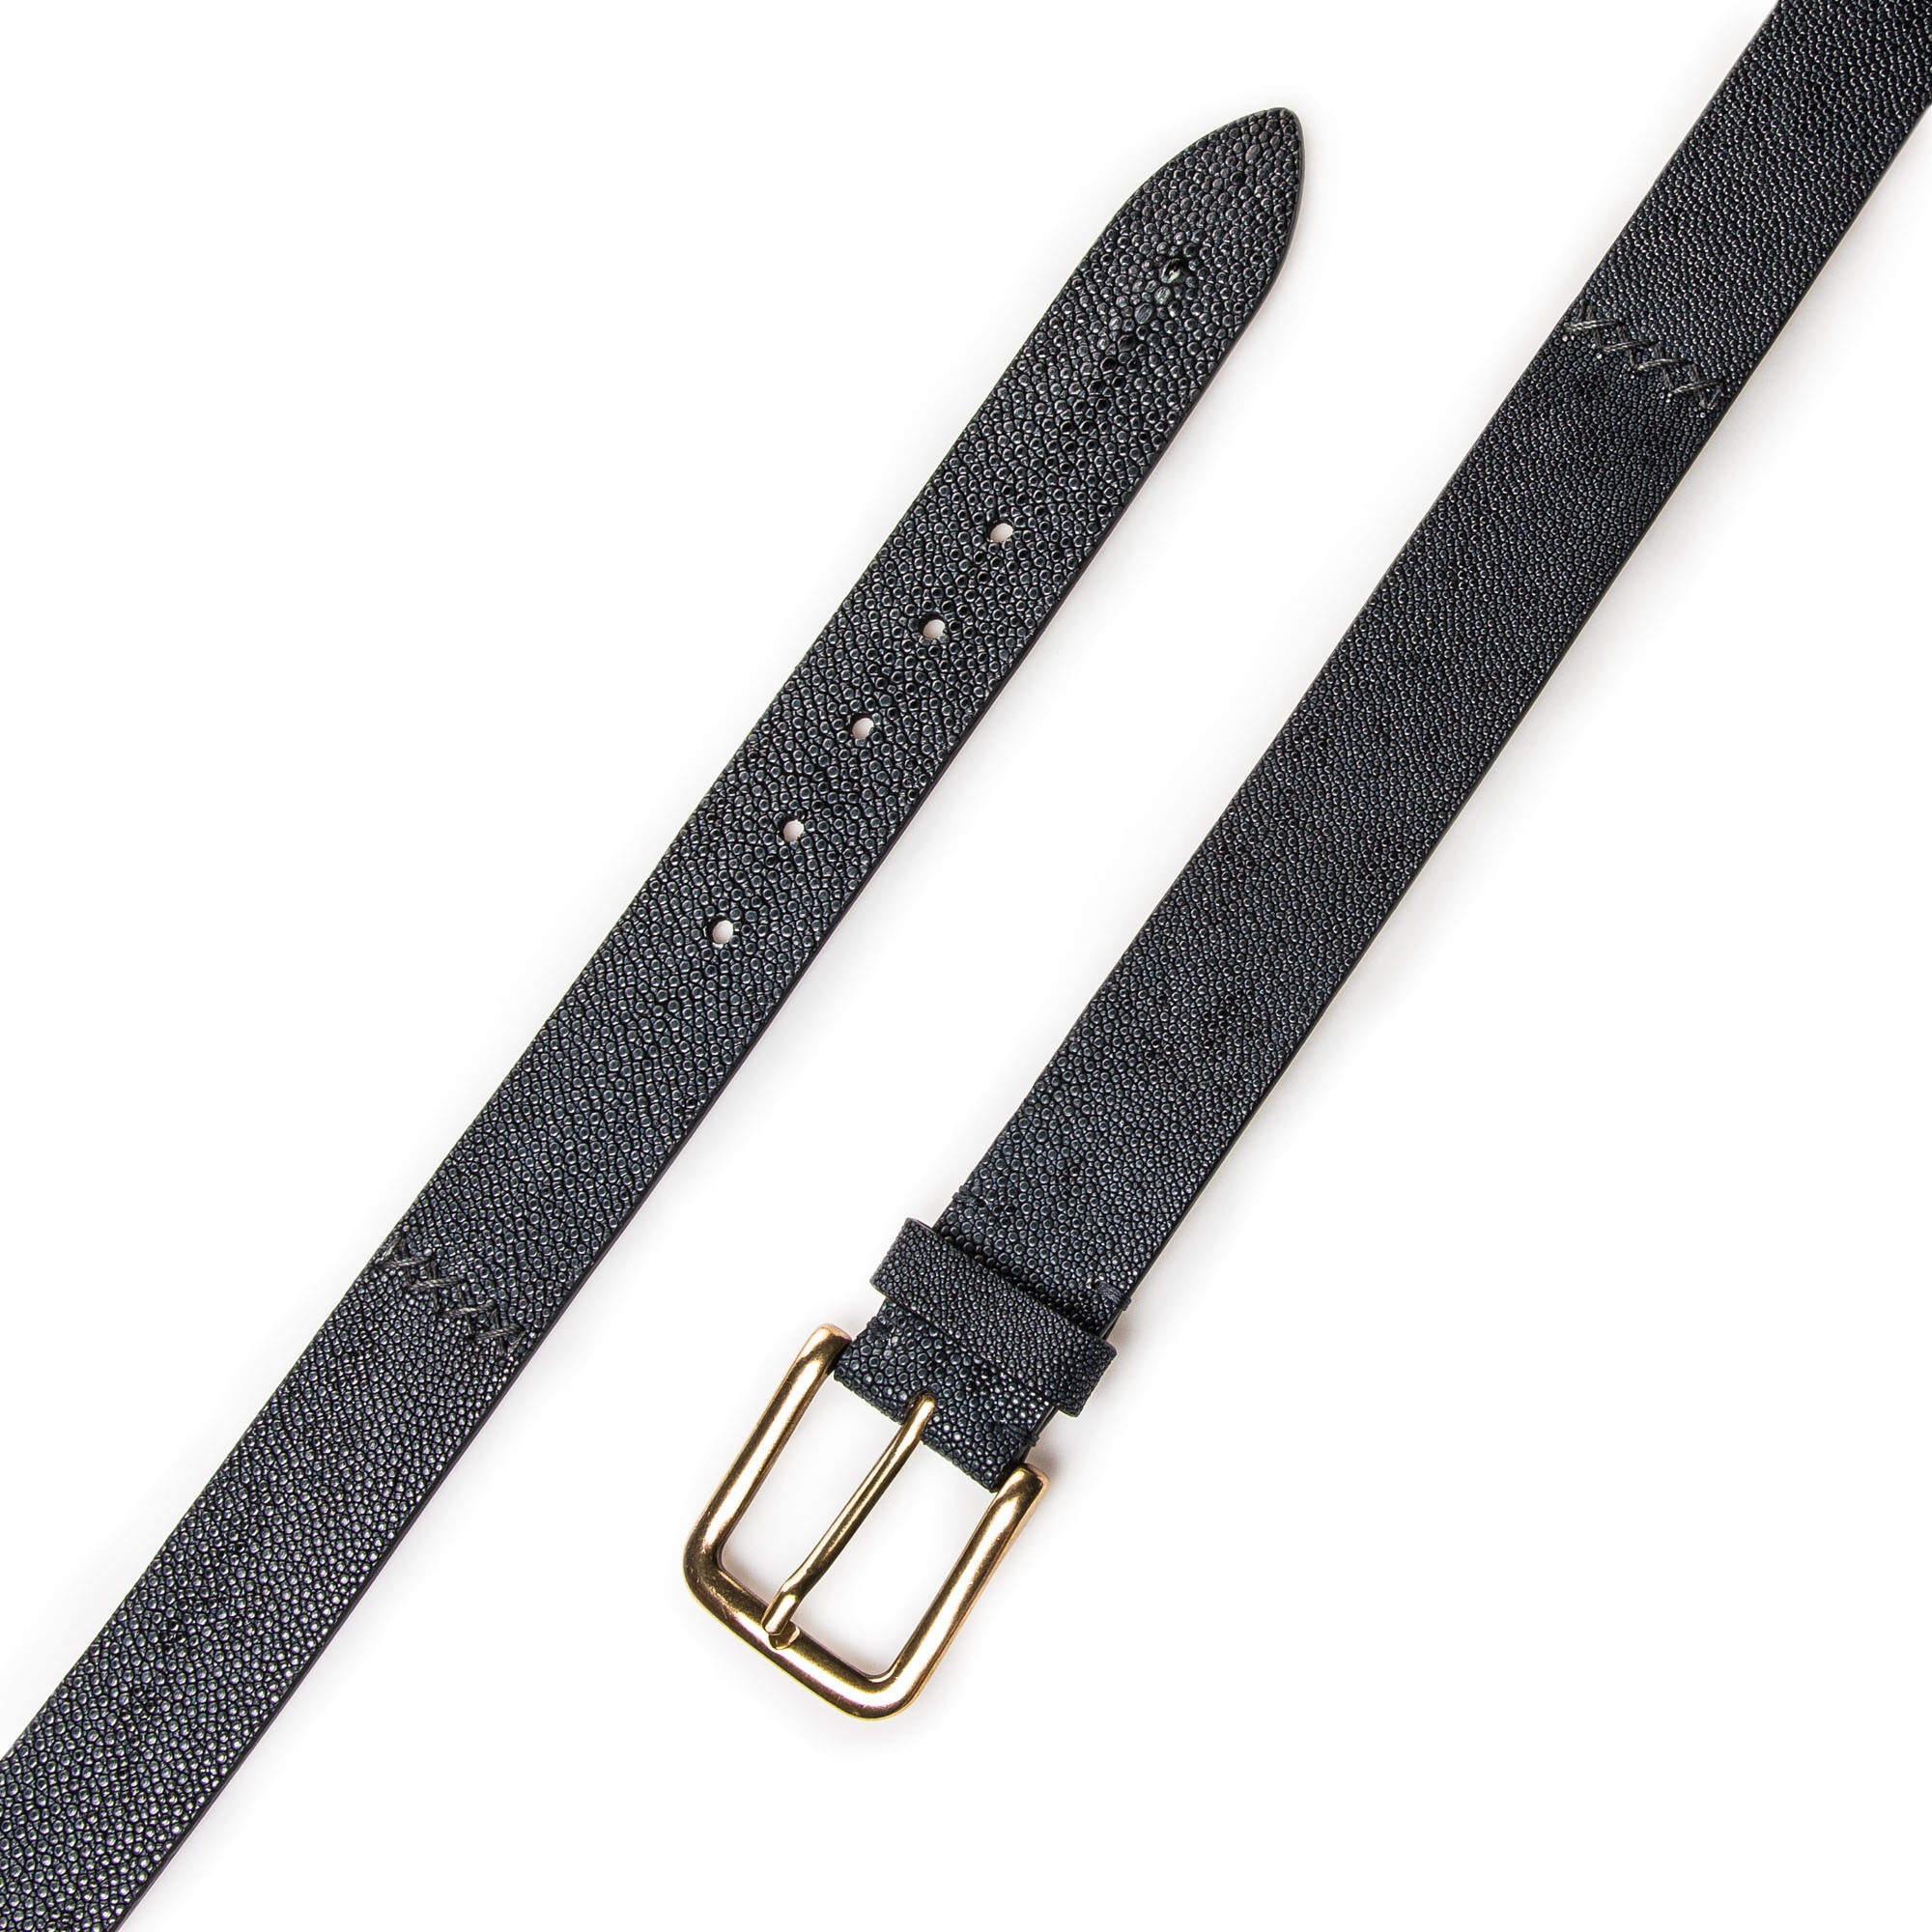 Post & Co. - Men's Stingray Belt in Black